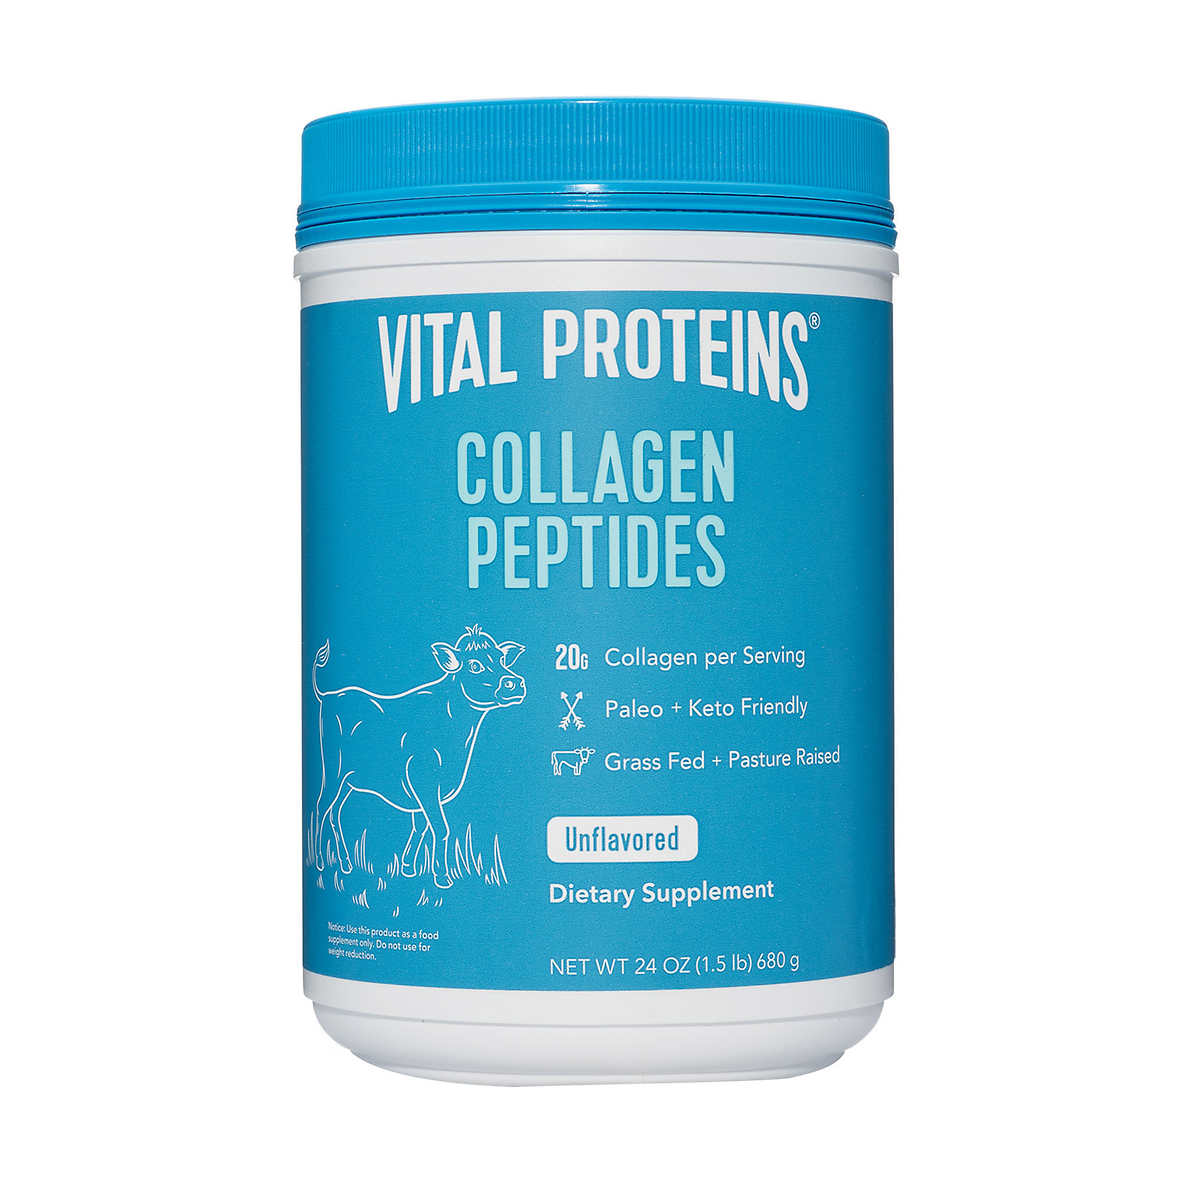 Vital Proteins Collagen Peptides Unflavored 24 0 Oz,Subway Tile Backsplash Ideas With Dark Cabinets